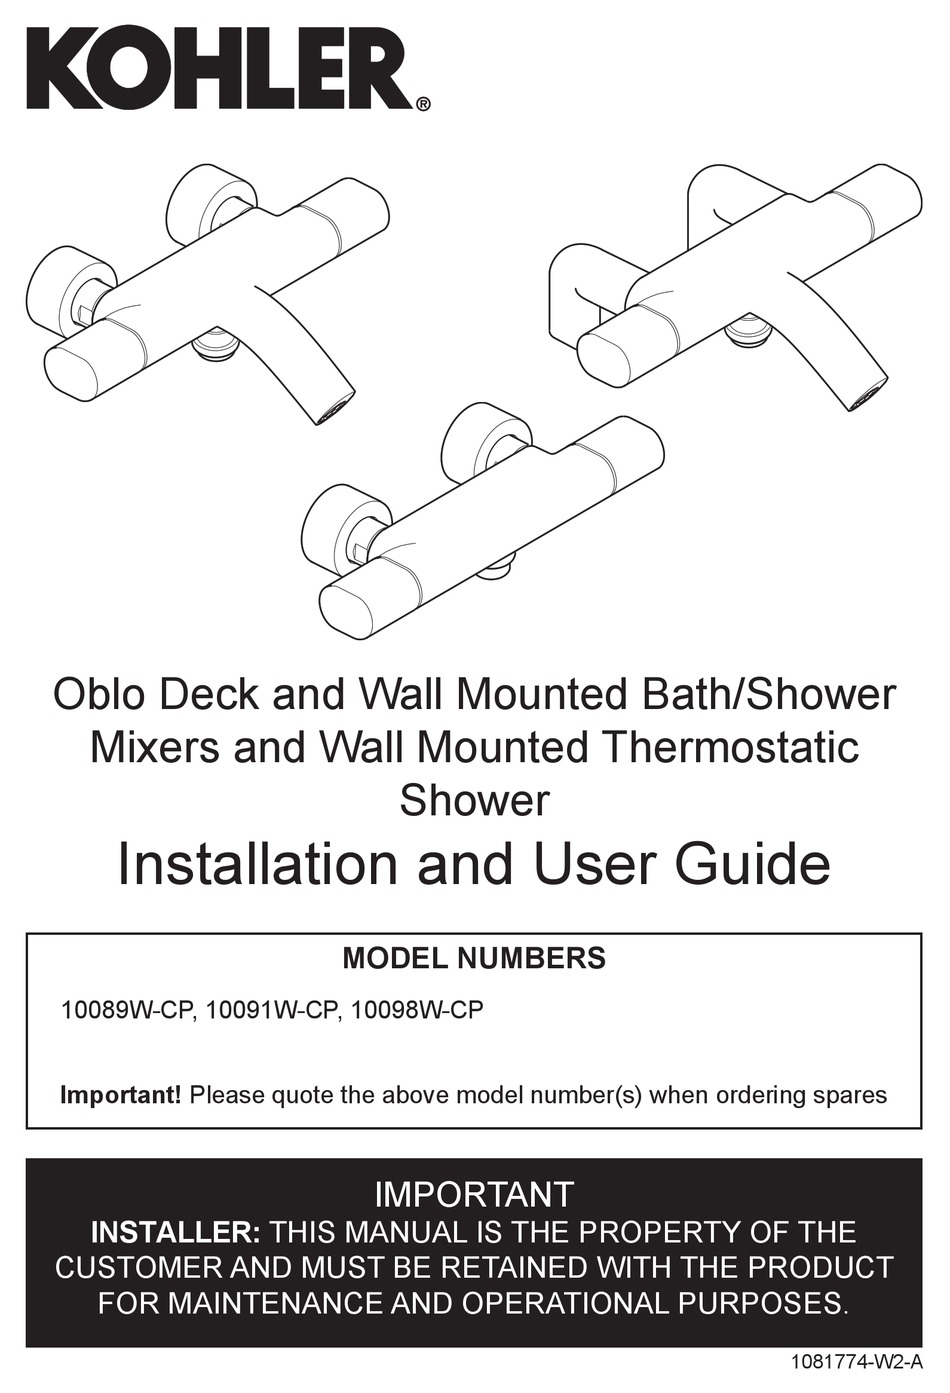 KOHLER 10089W CP INSTALLATION AND USER MANUAL Pdf Download ManualsLib